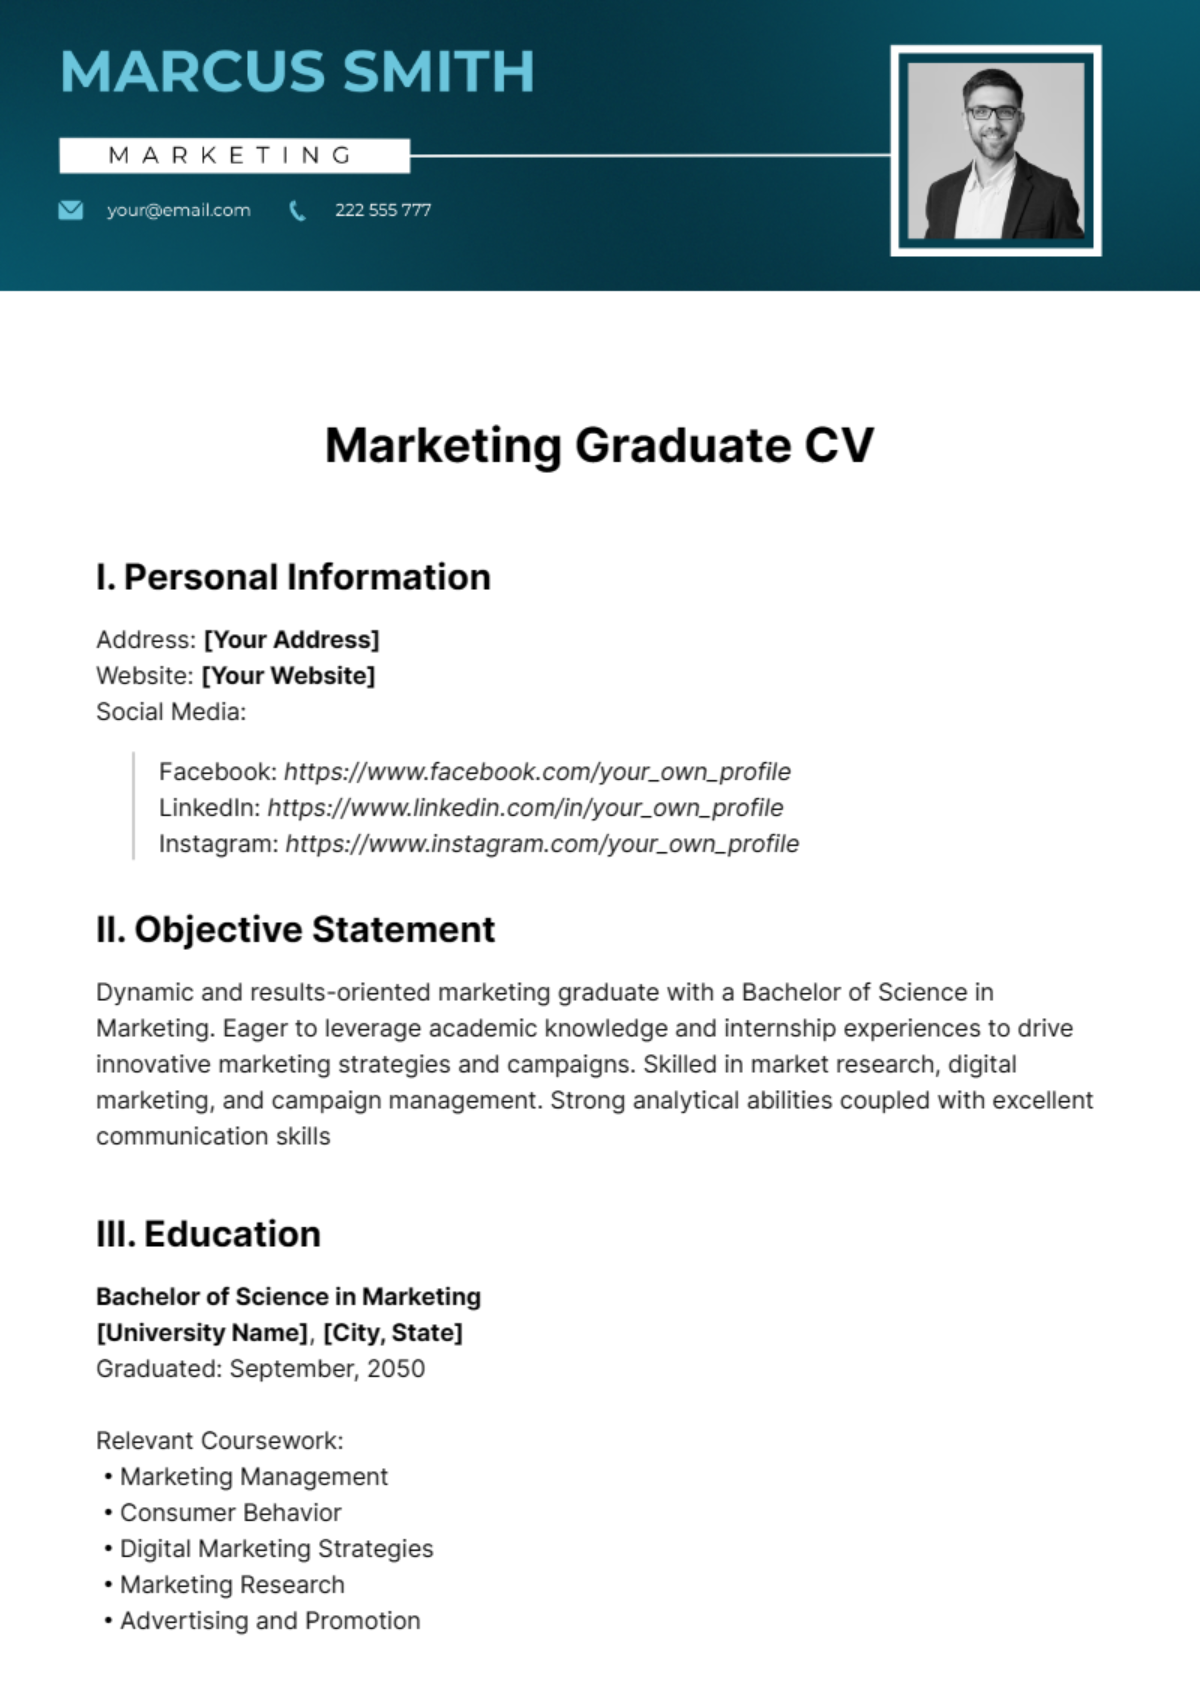 Marketing Graduate CV Template